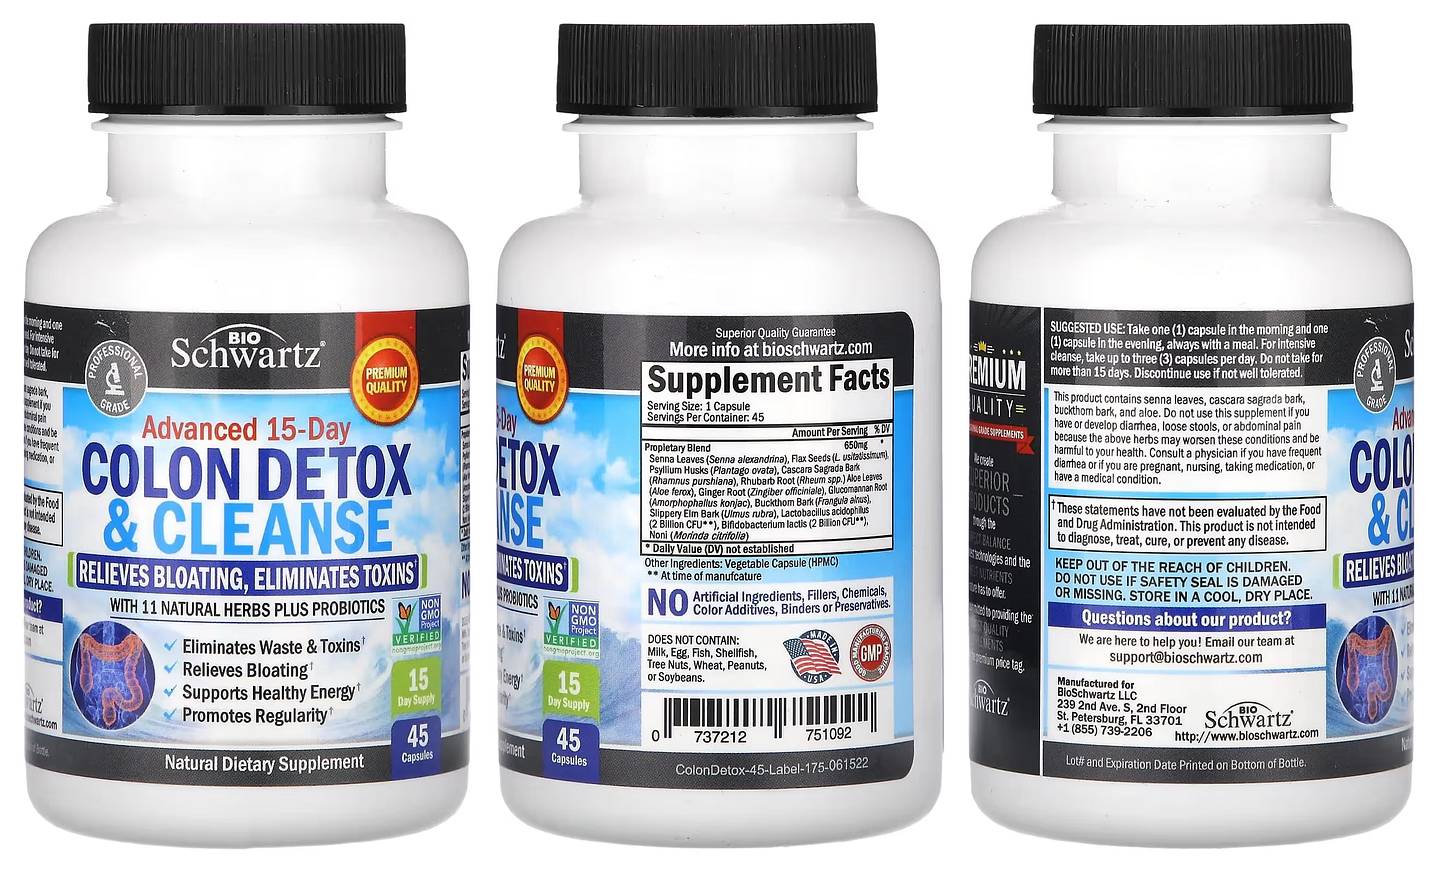 BioSchwartz, Advanced 15-Day Colon Detox & Cleanse packaging